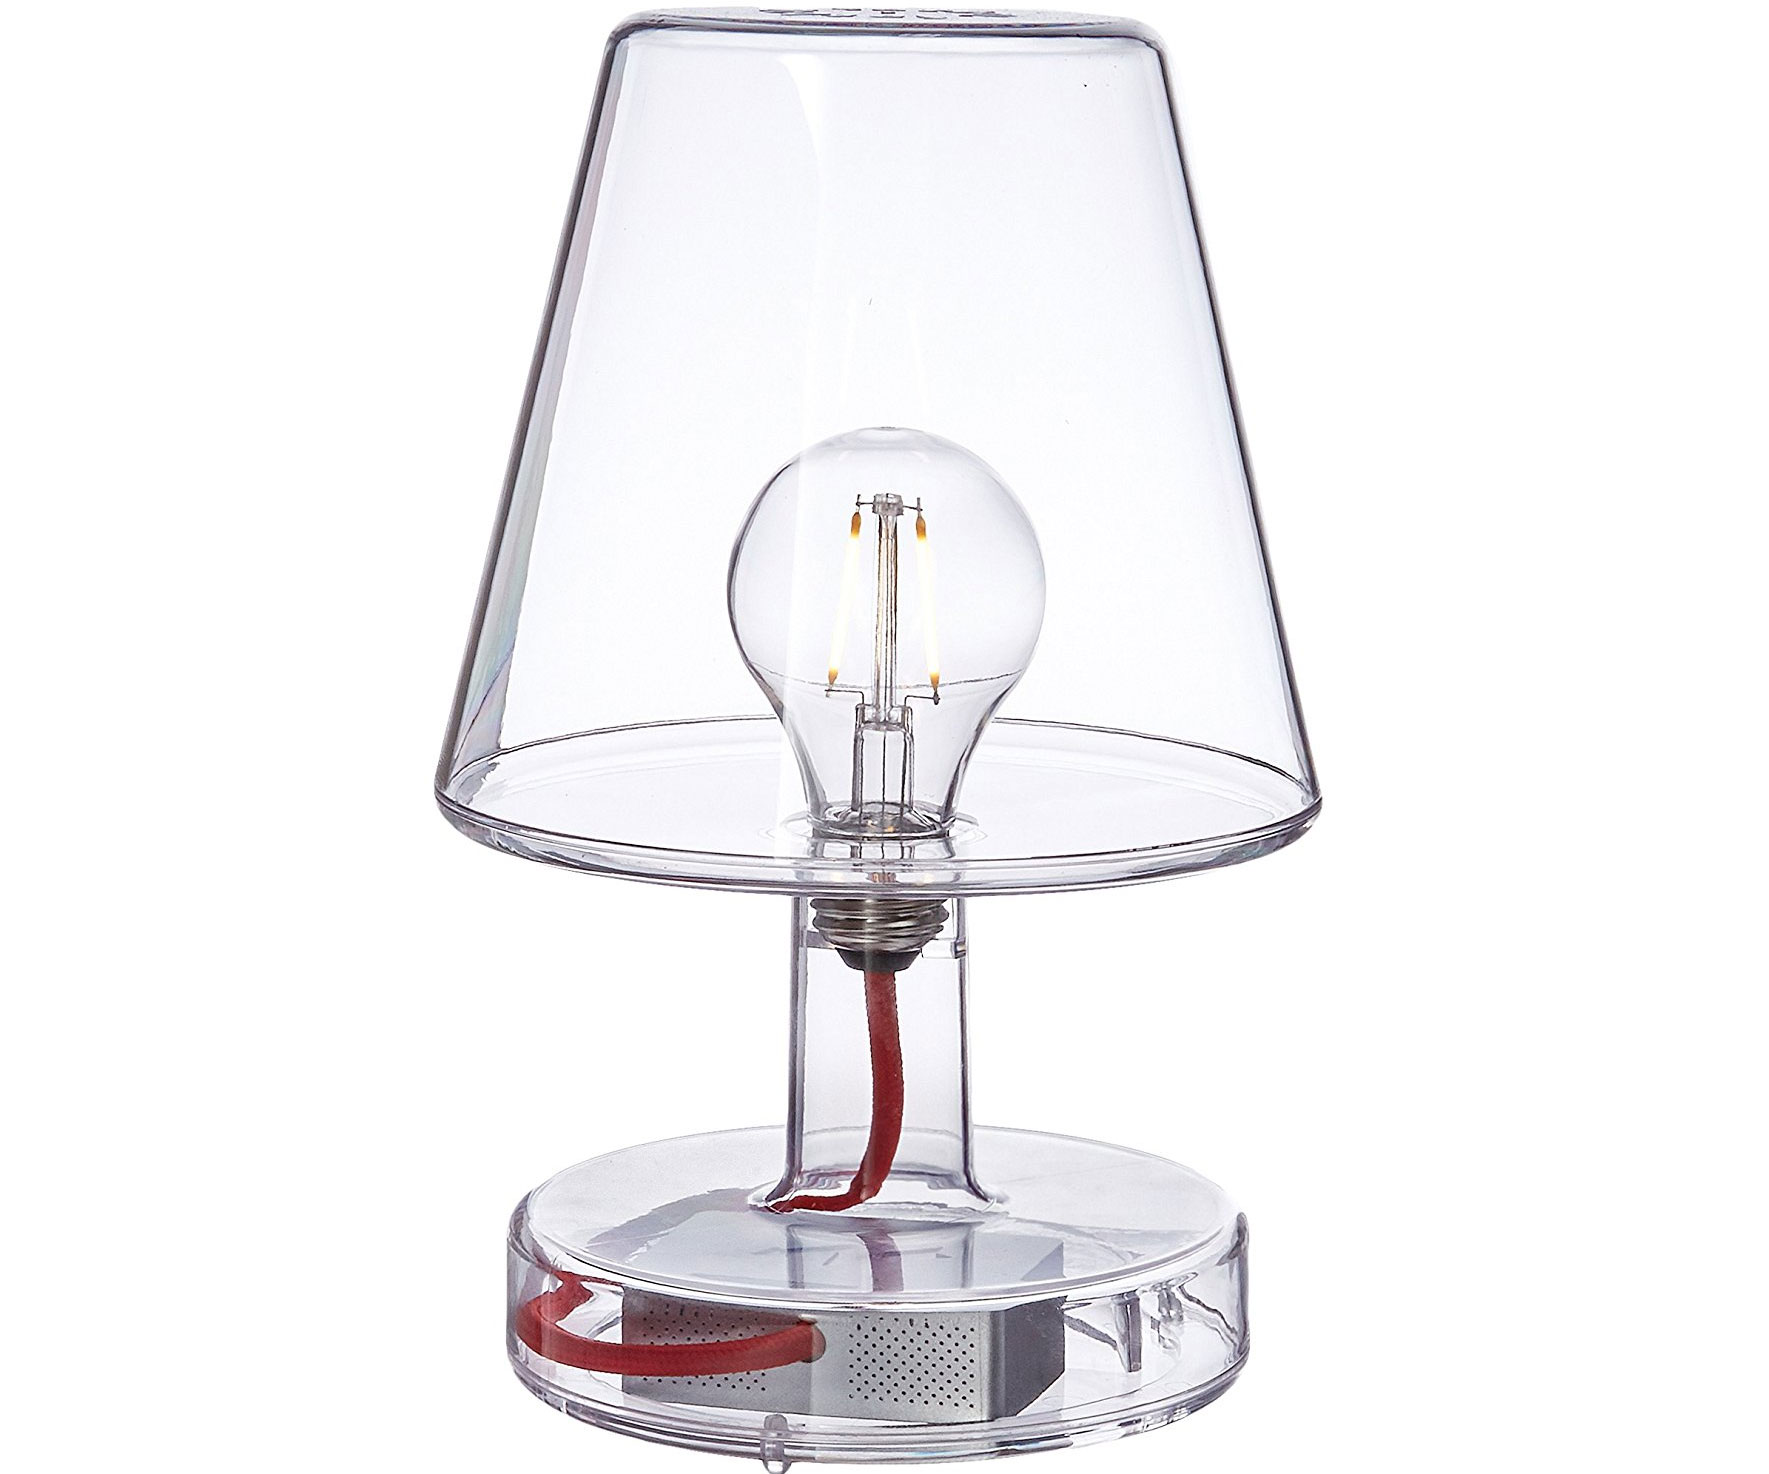 Transparent Table Lamp